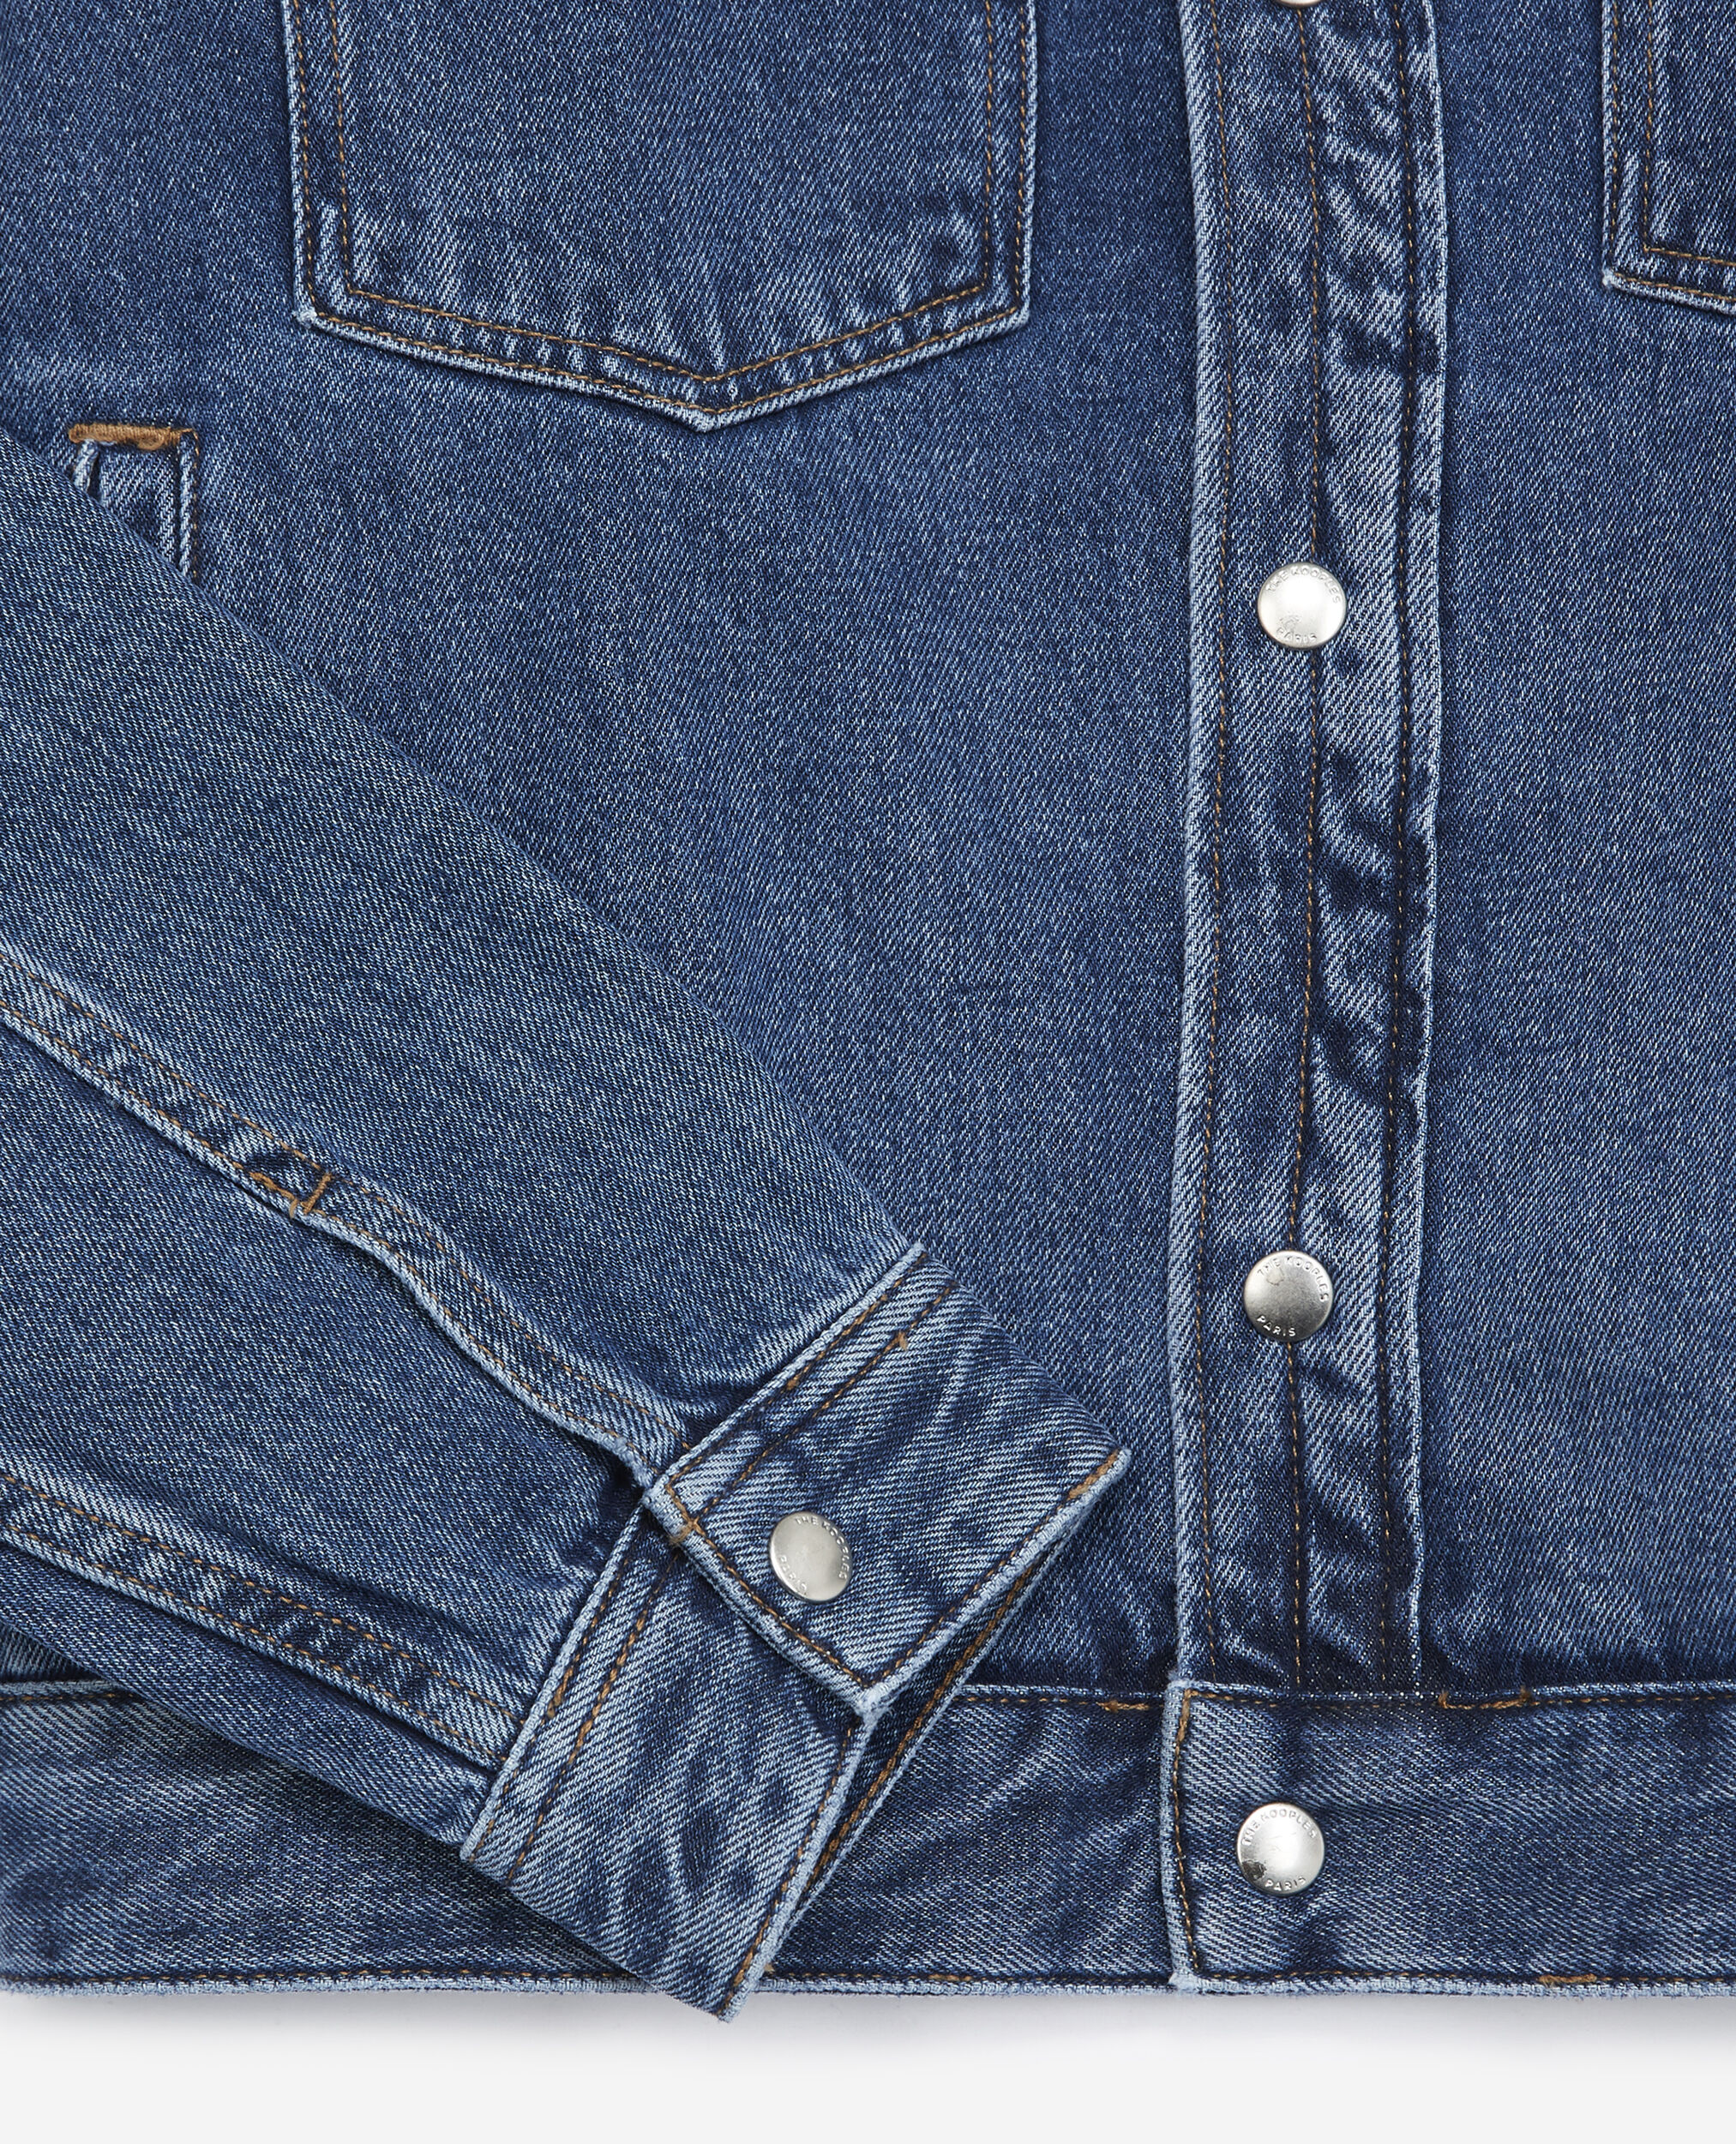 Blouson jean bleu à boutons-pression, BLEU INDIGO, hi-res image number null